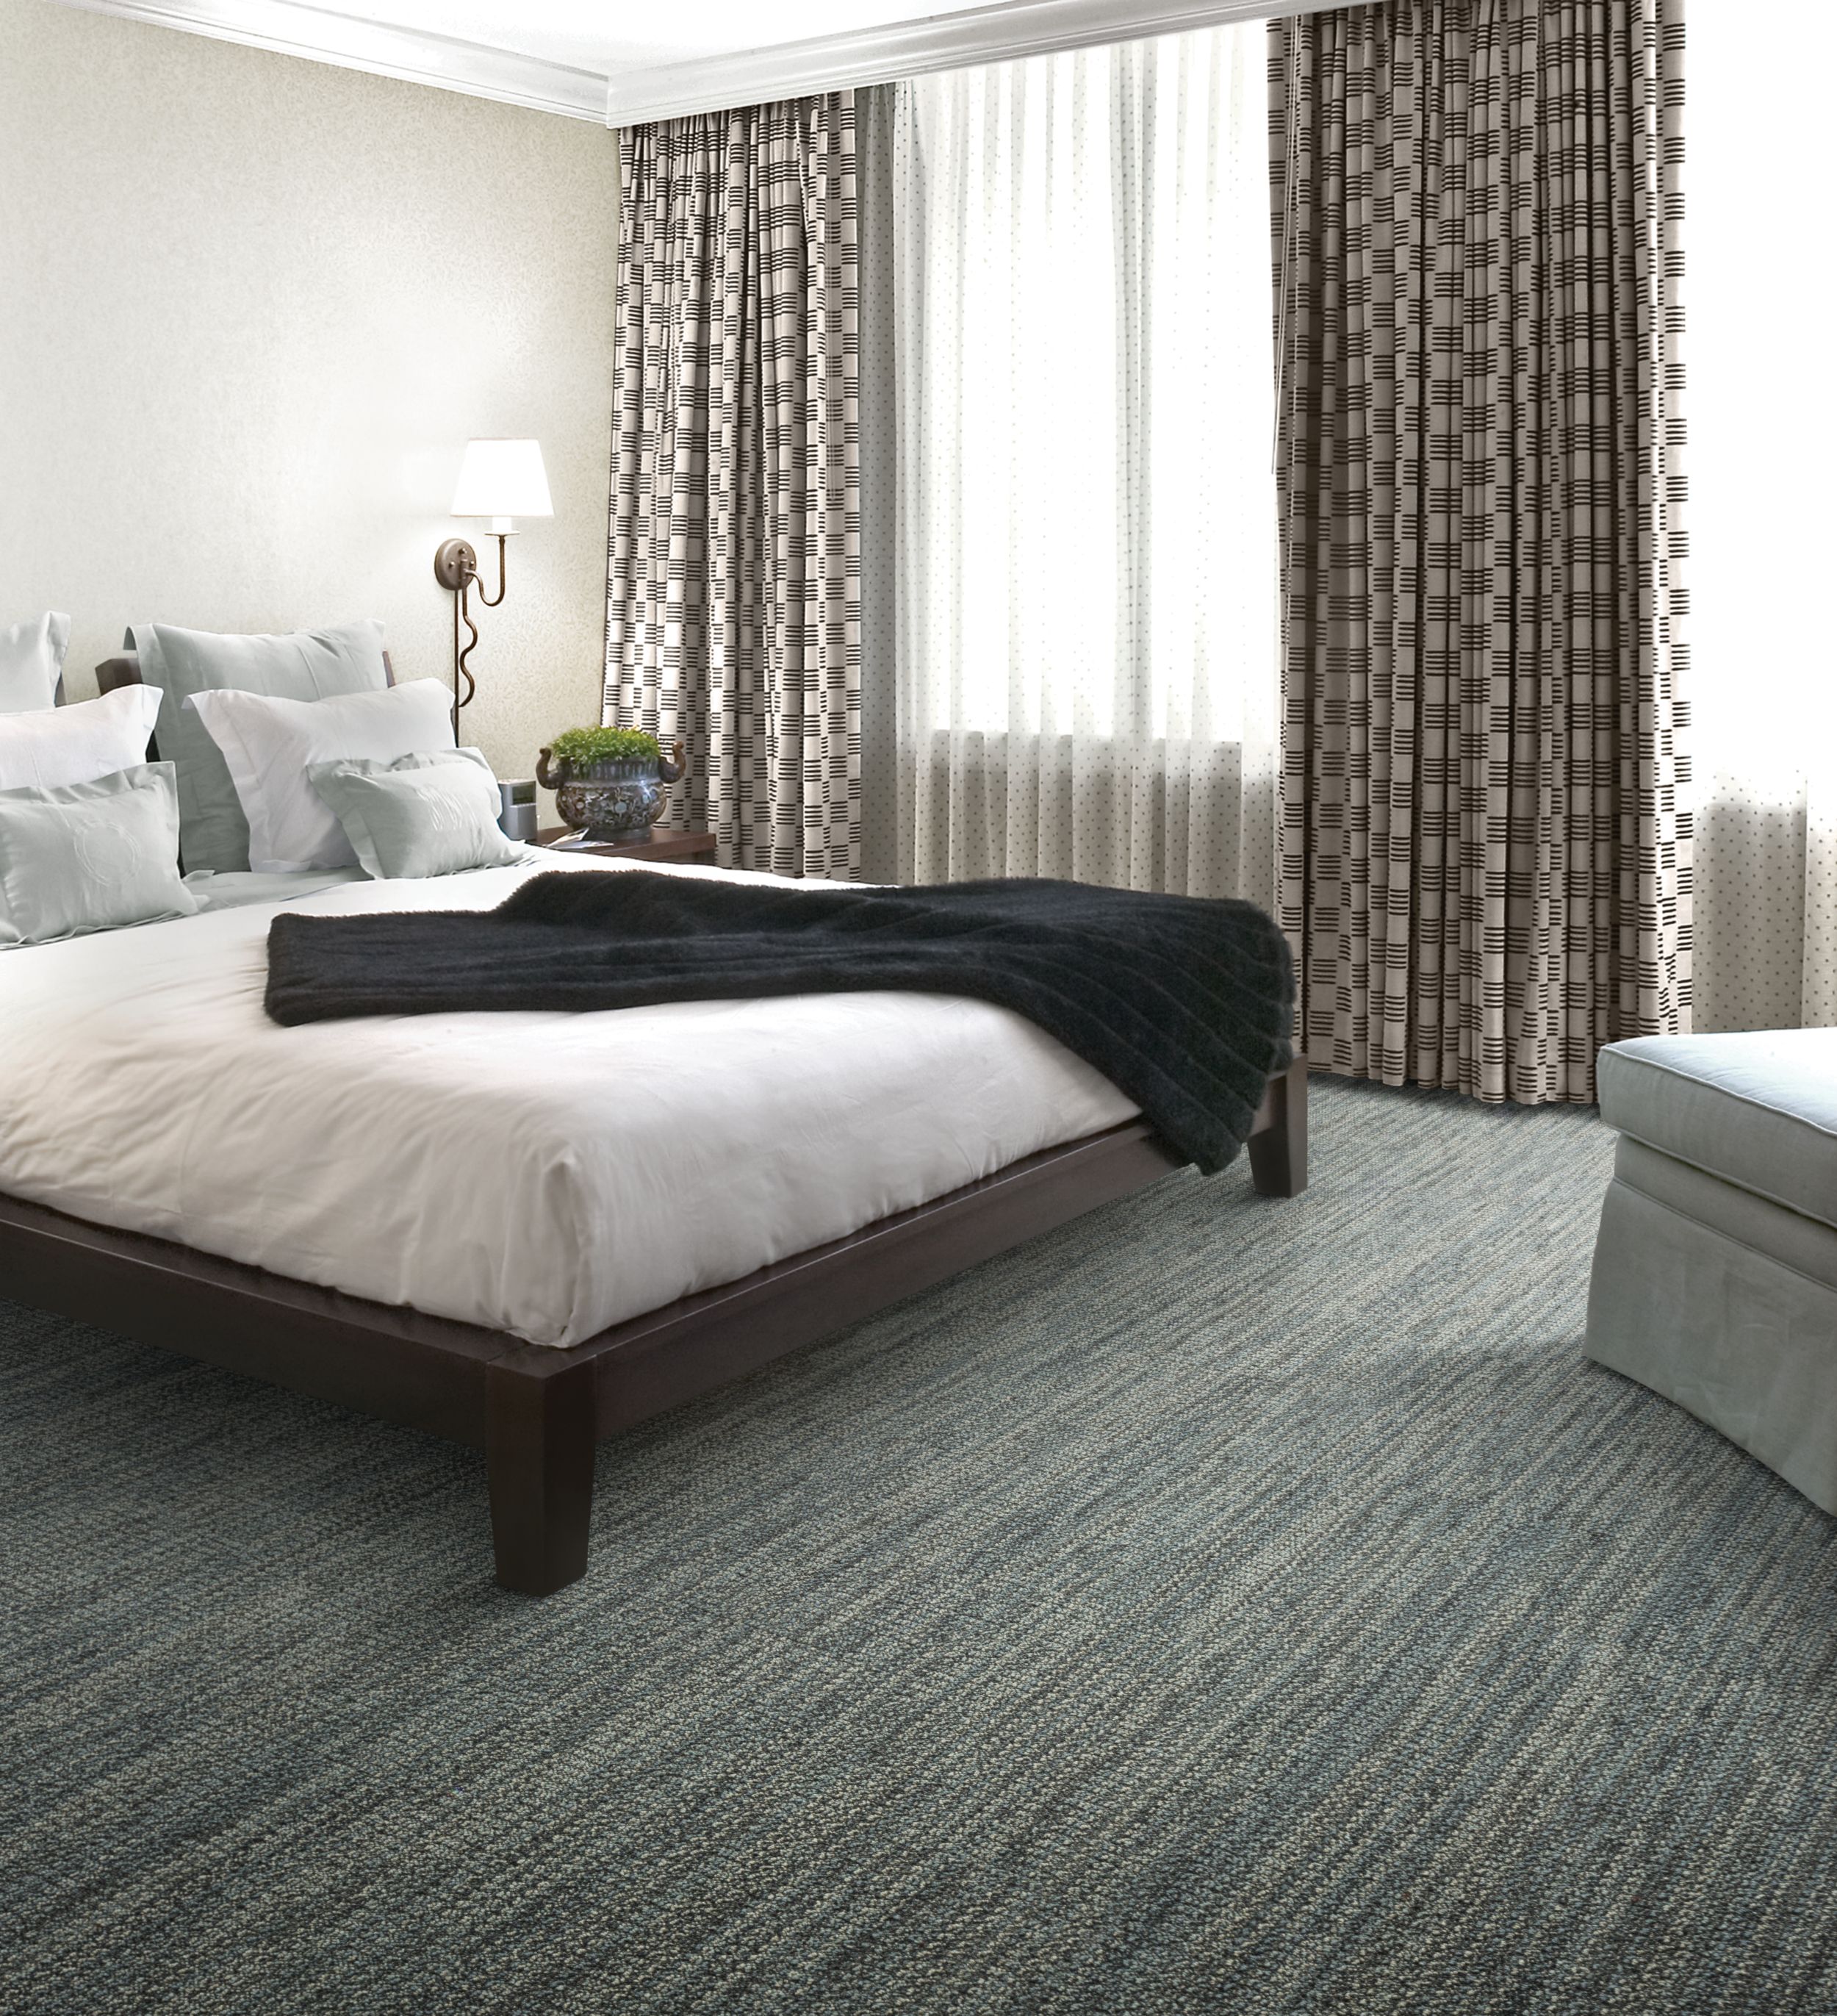 Interface Afternoon Light carpet tile in hotel guest room imagen número 2